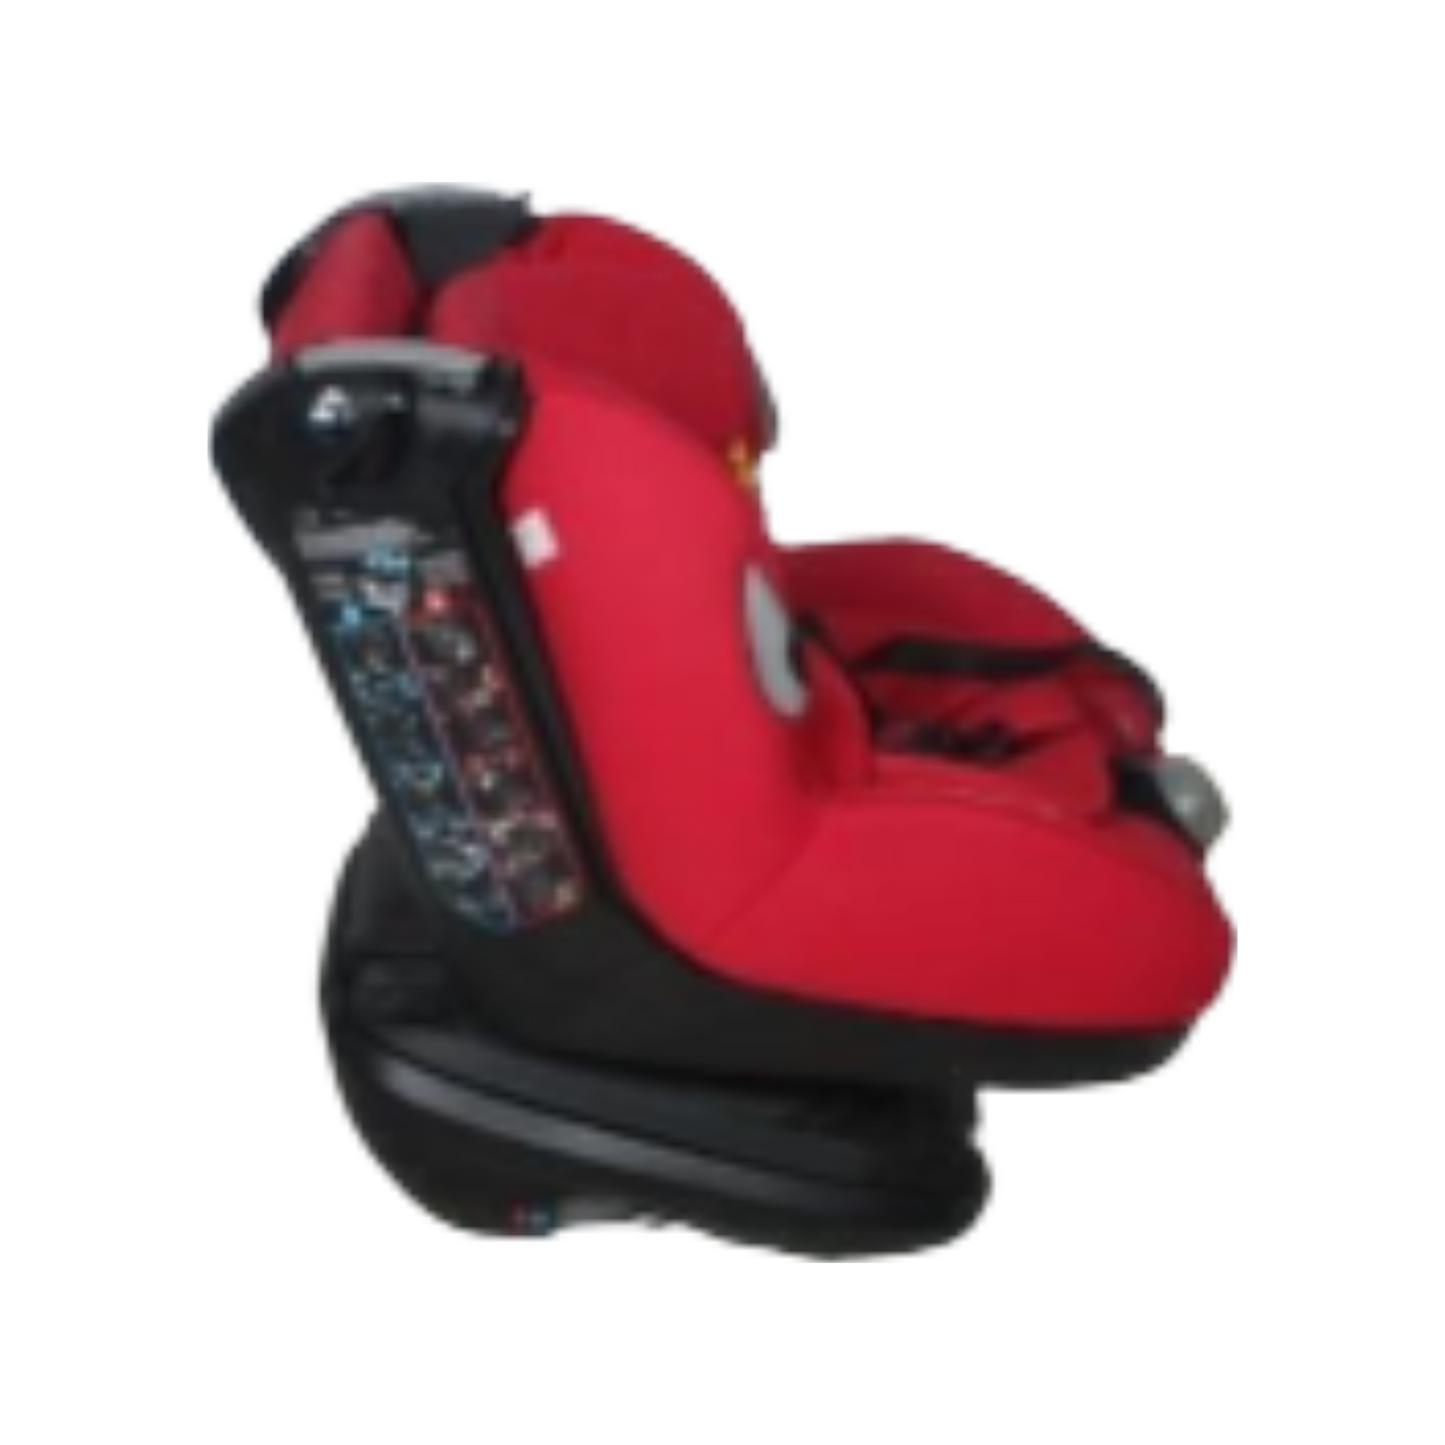 Preloved Maxi Cosi Opal Car Seat, Vivid Red